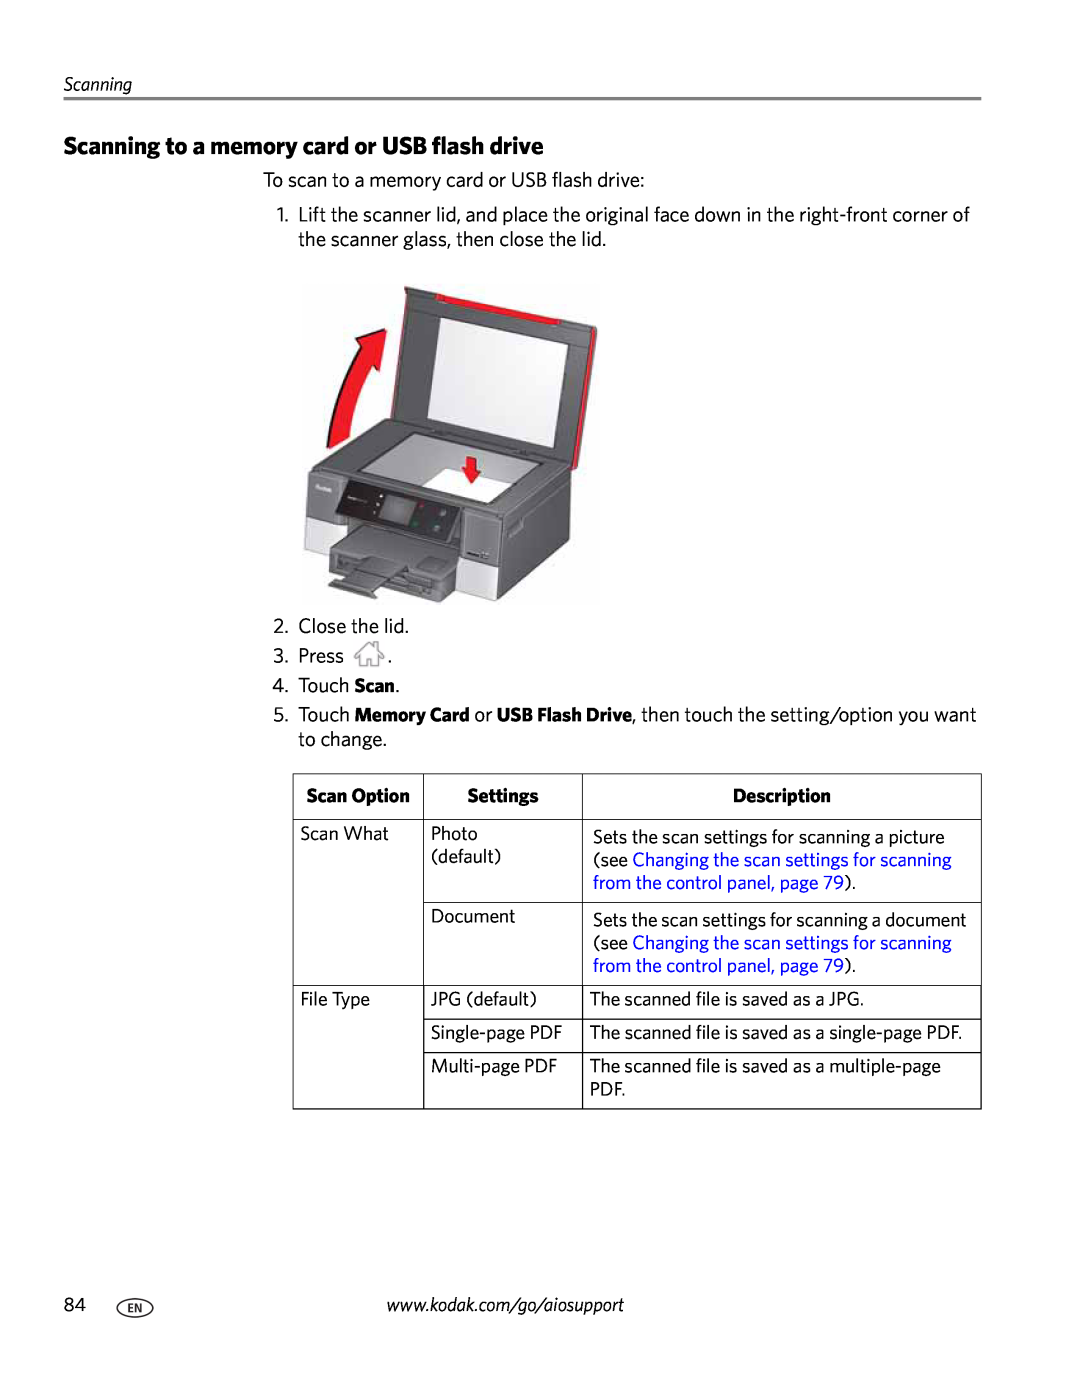 Kodak 7.1 manual Scanning to a memory card or USB flash drive 